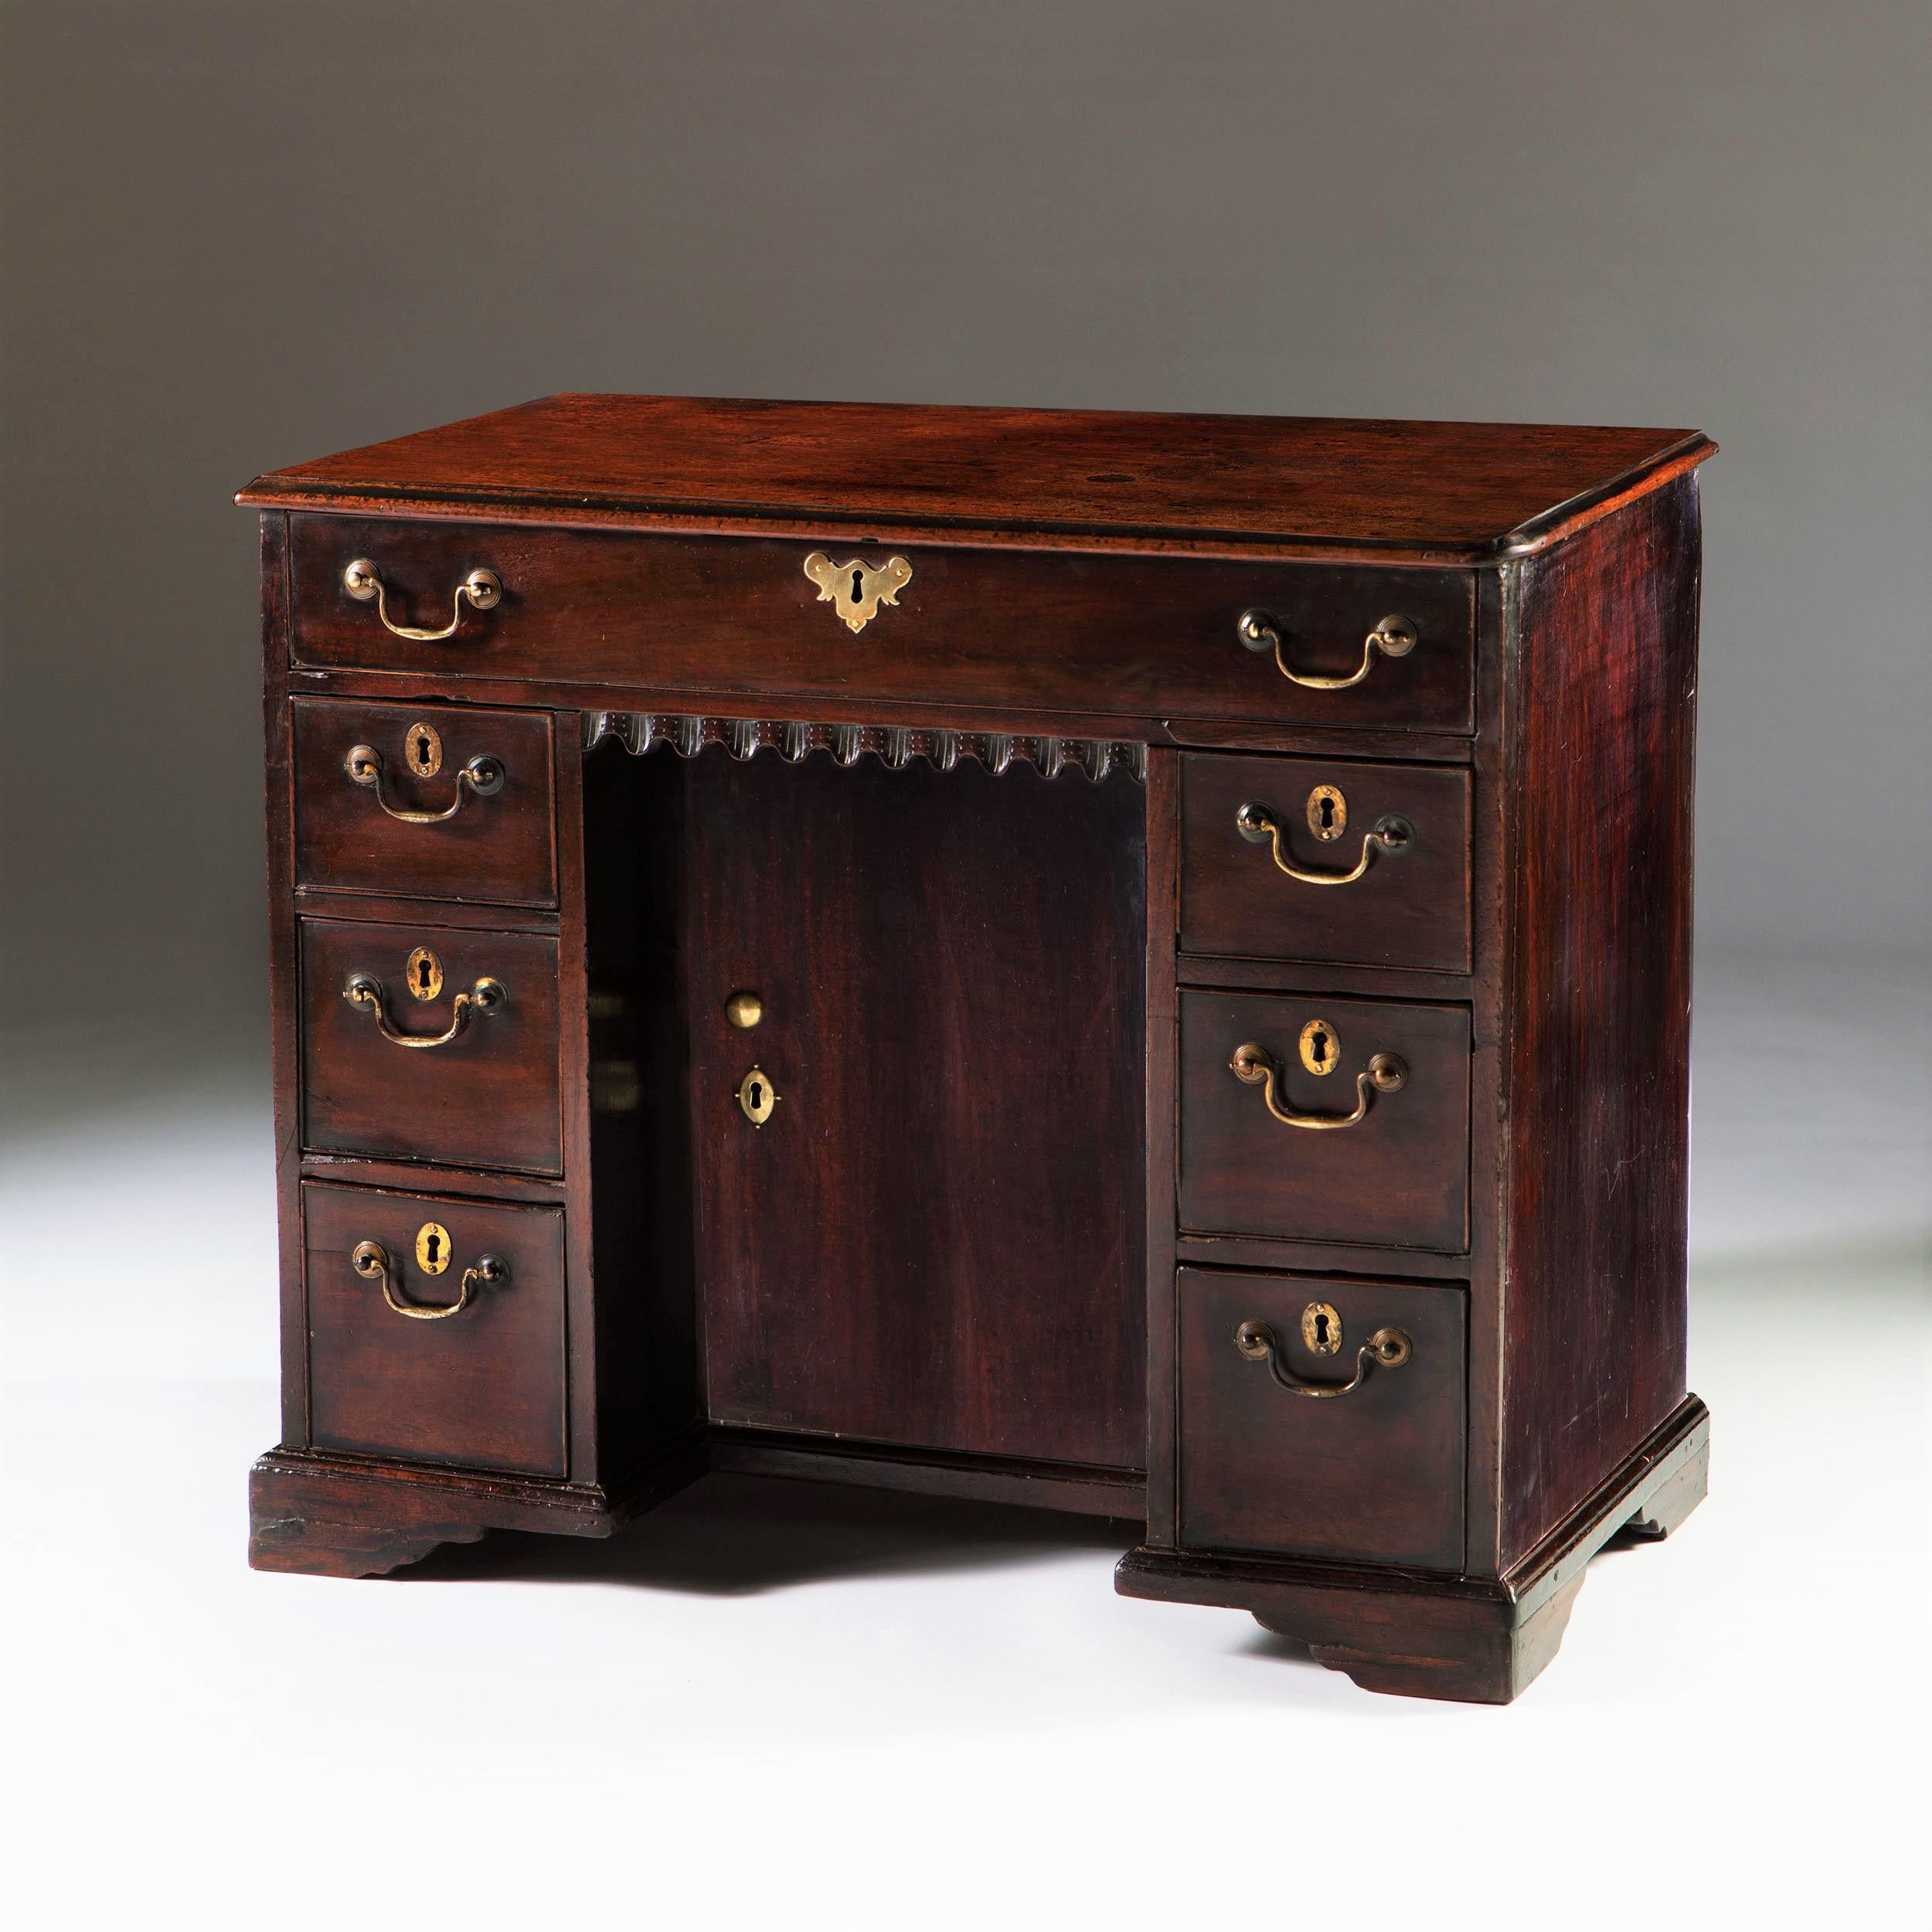 kneehole desk for sale